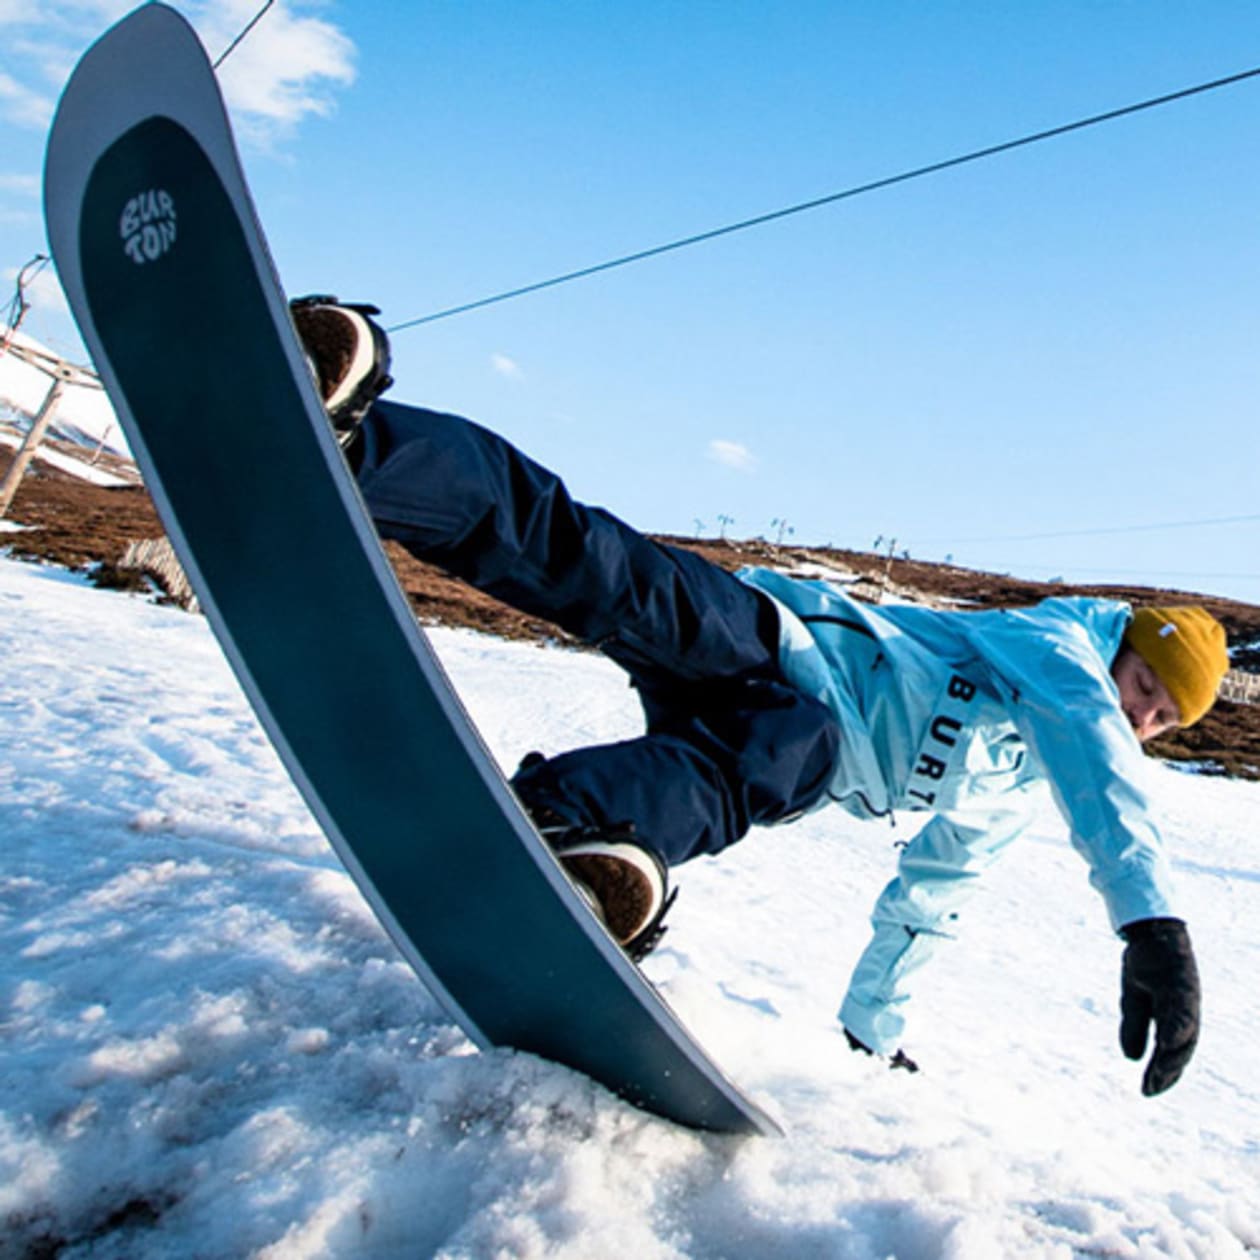 Detail Images Of Snowboards Nomer 40